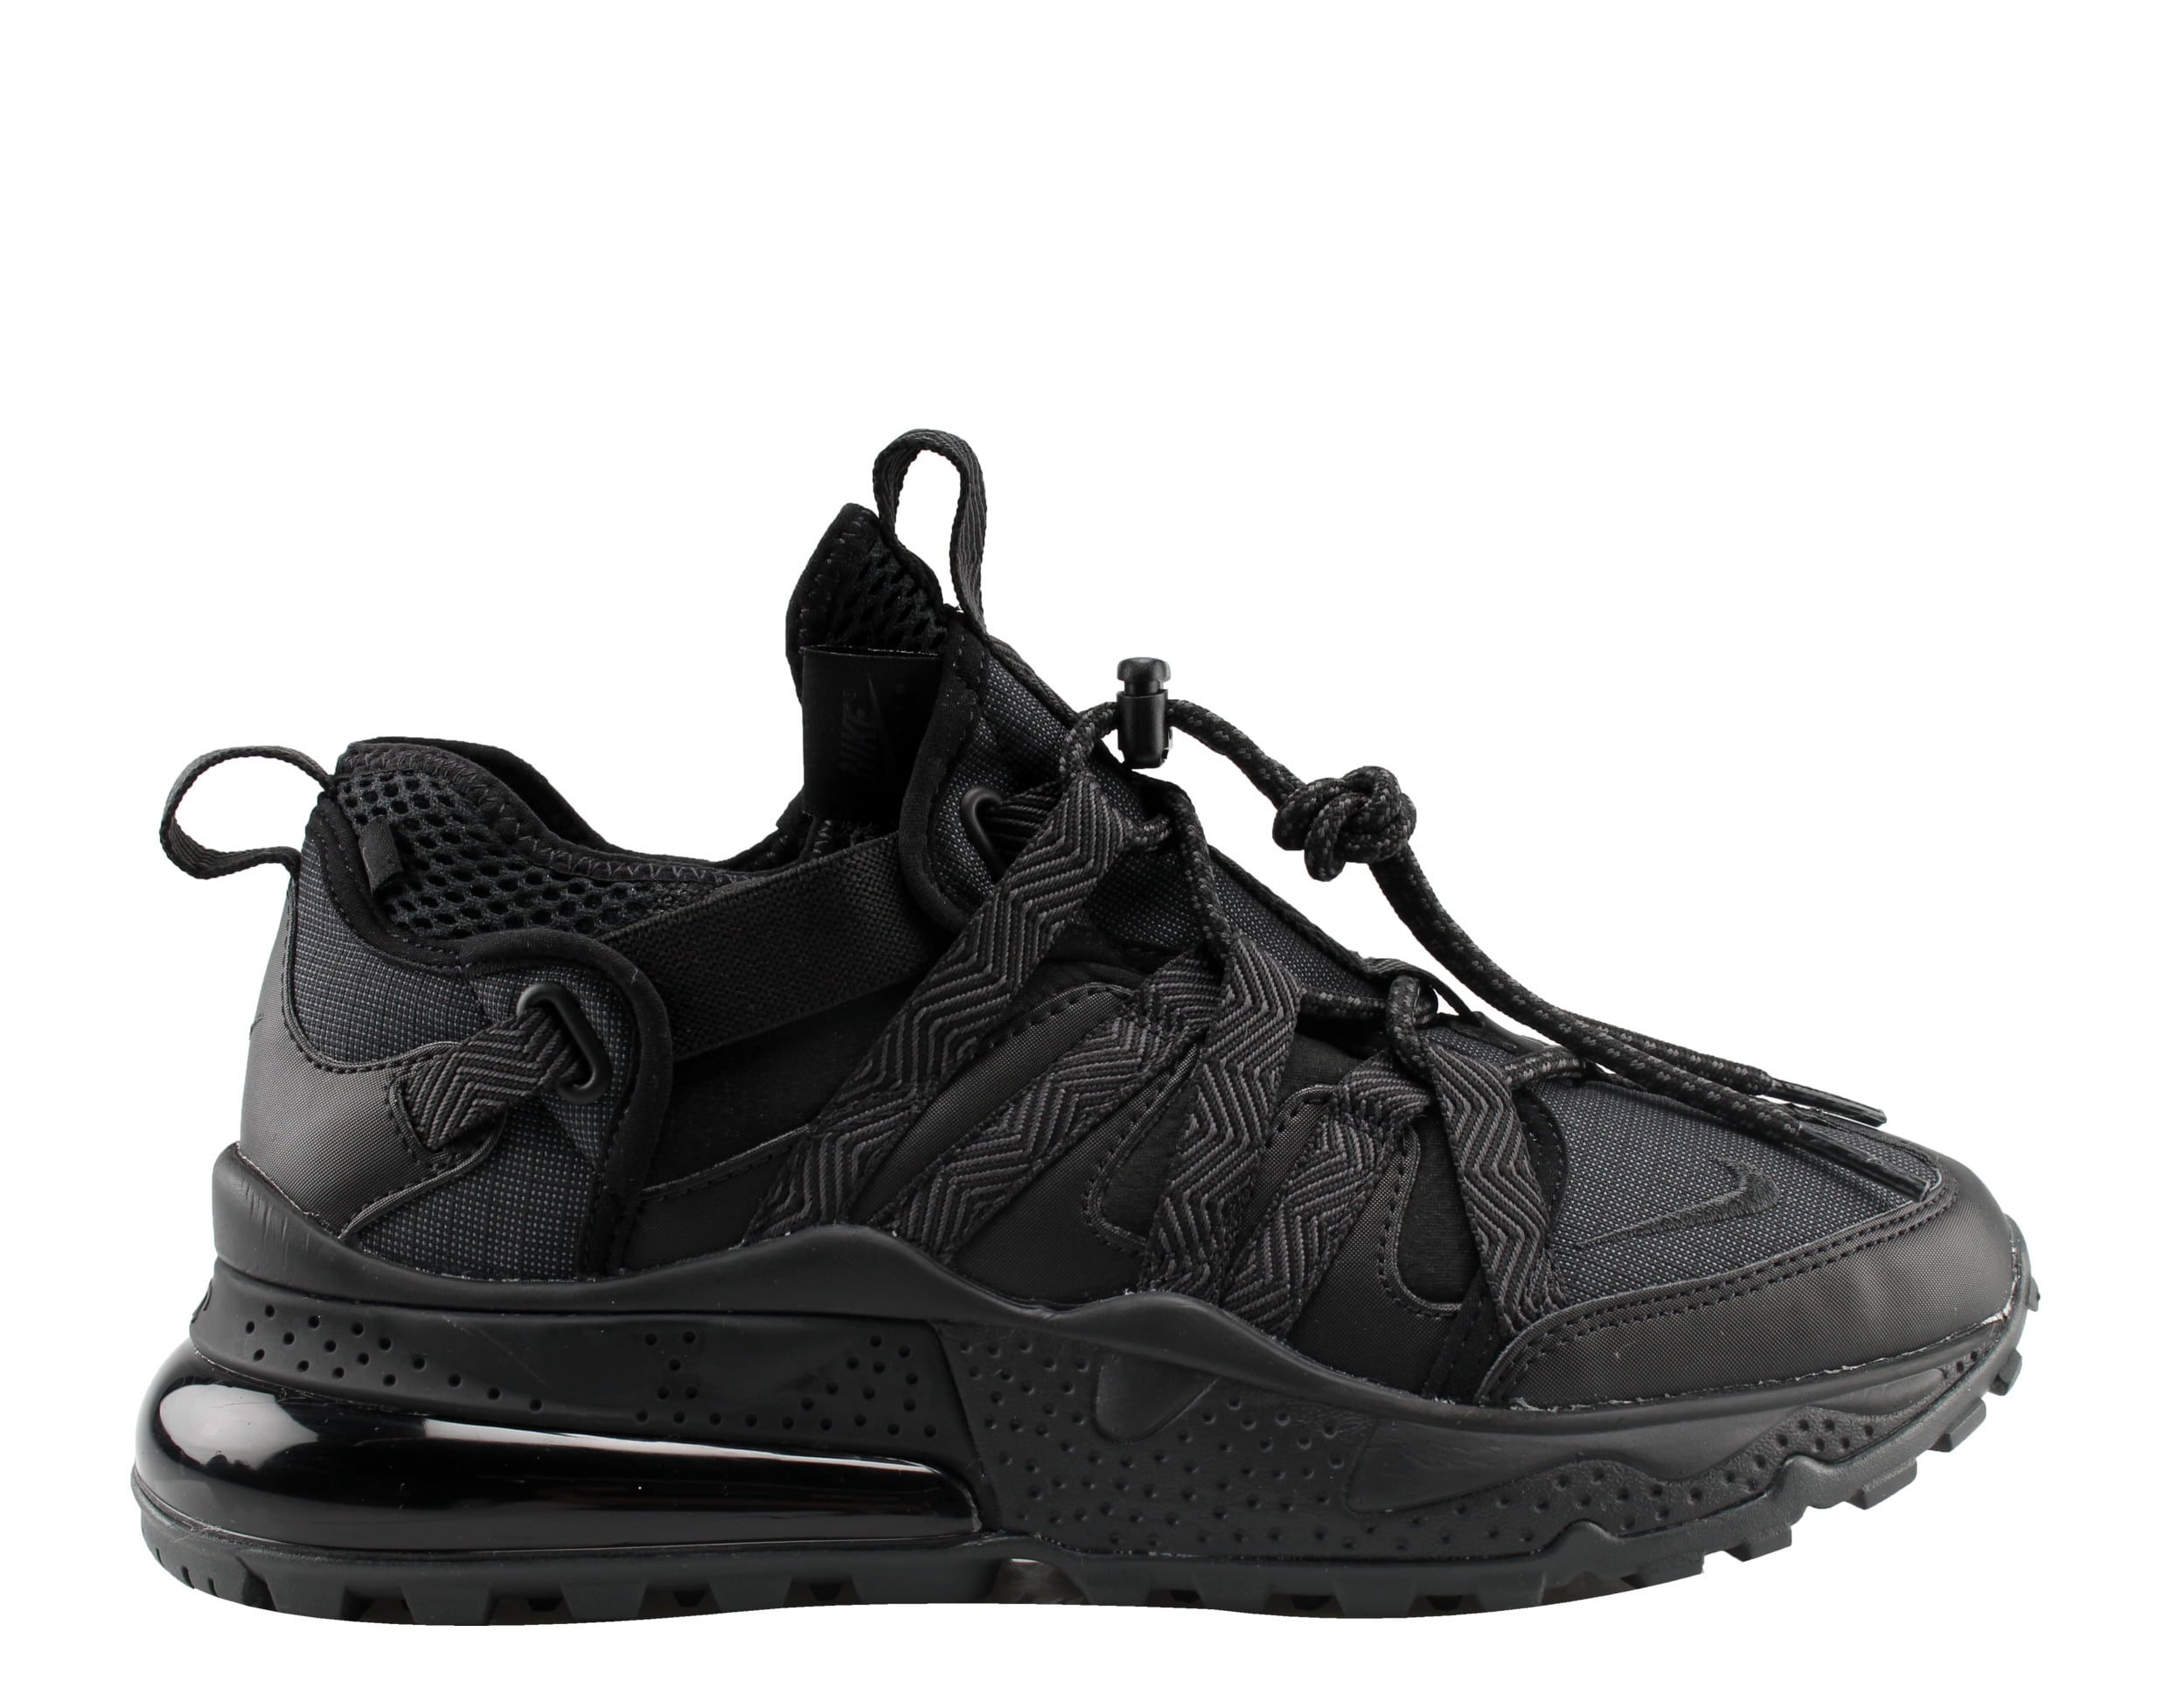 Nike Air Max 270 Bowfin Running Shoes Size - Walmart.com